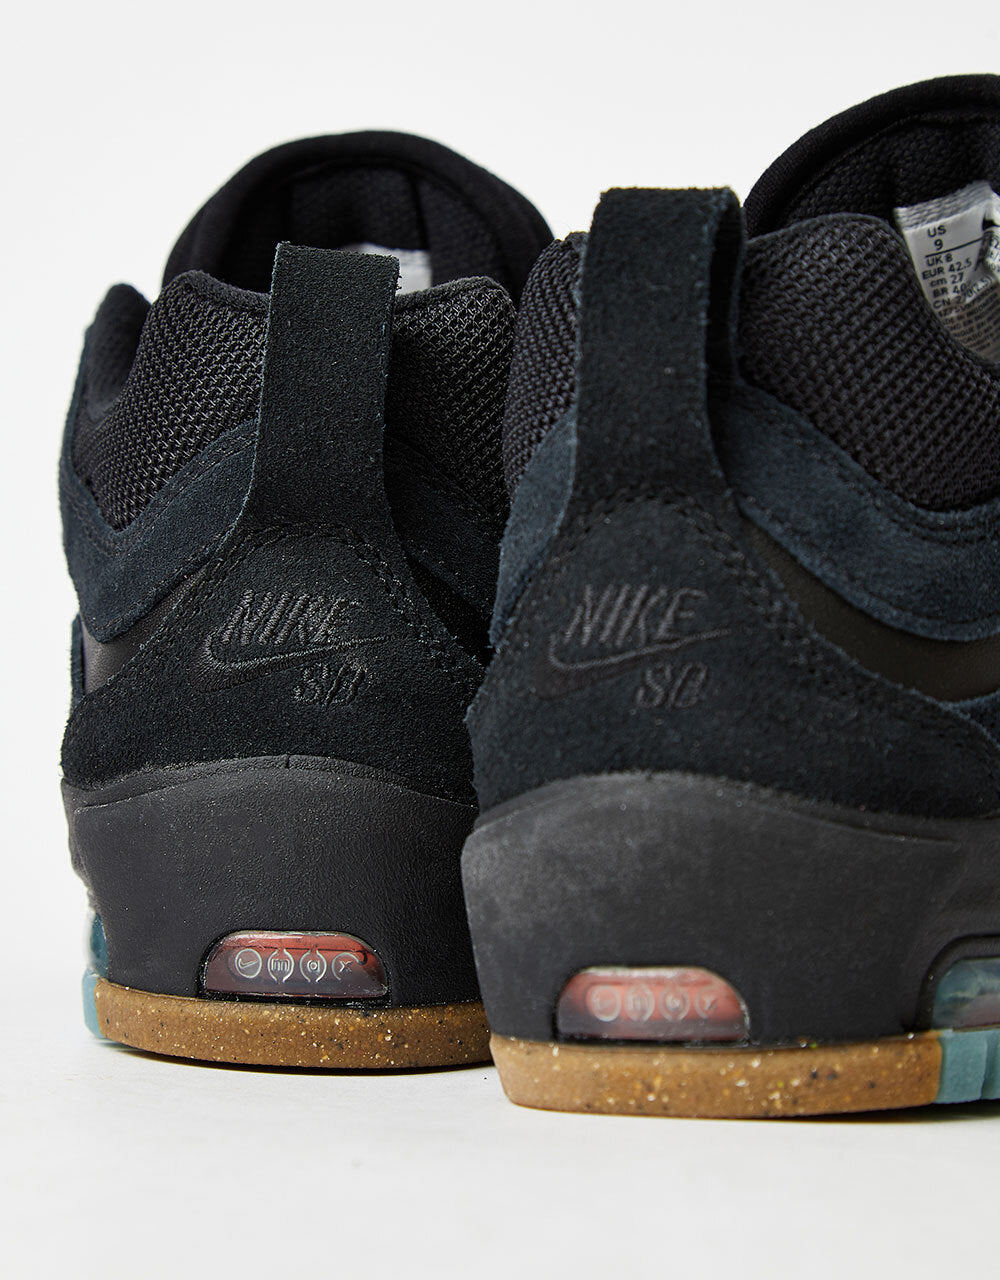 Nike SB Air Max Ishod Skate Shoes - Black/Black-Anthracite-Black-Gum Lt Brown-Univ Blue